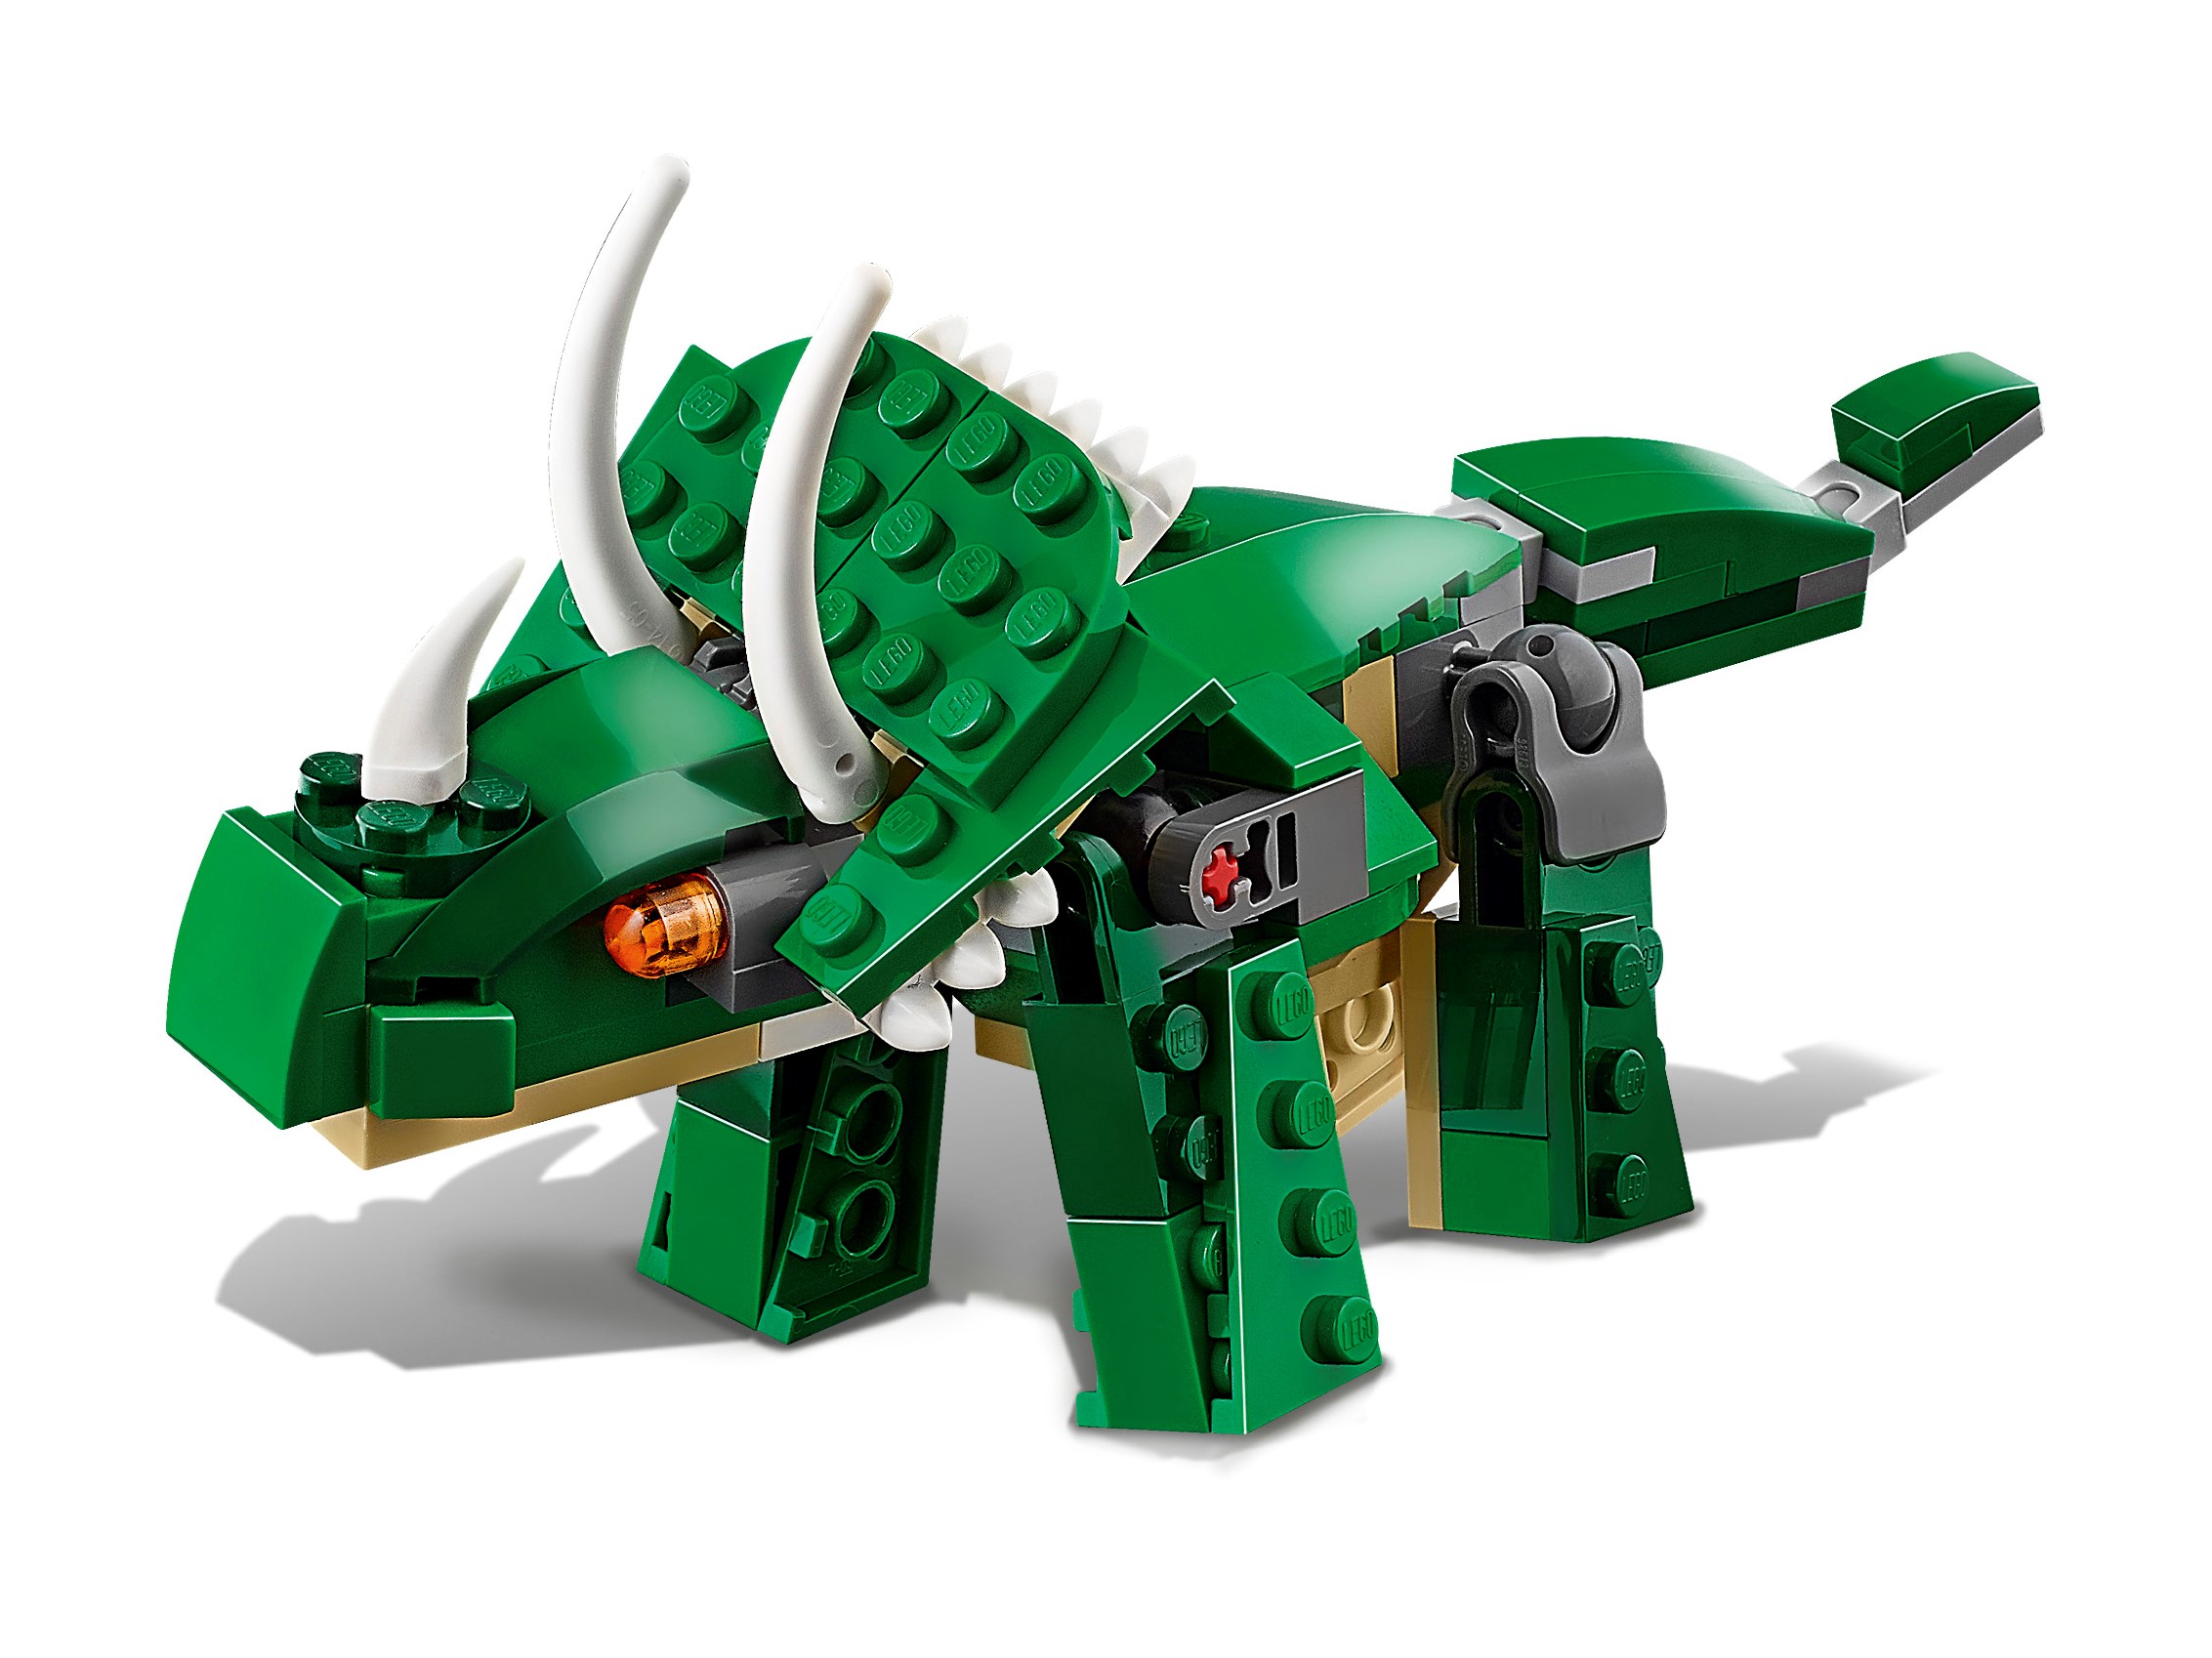 LEGO Creator Mighty Dinosaurs 31058 Build It Yourself Dinosaur Set